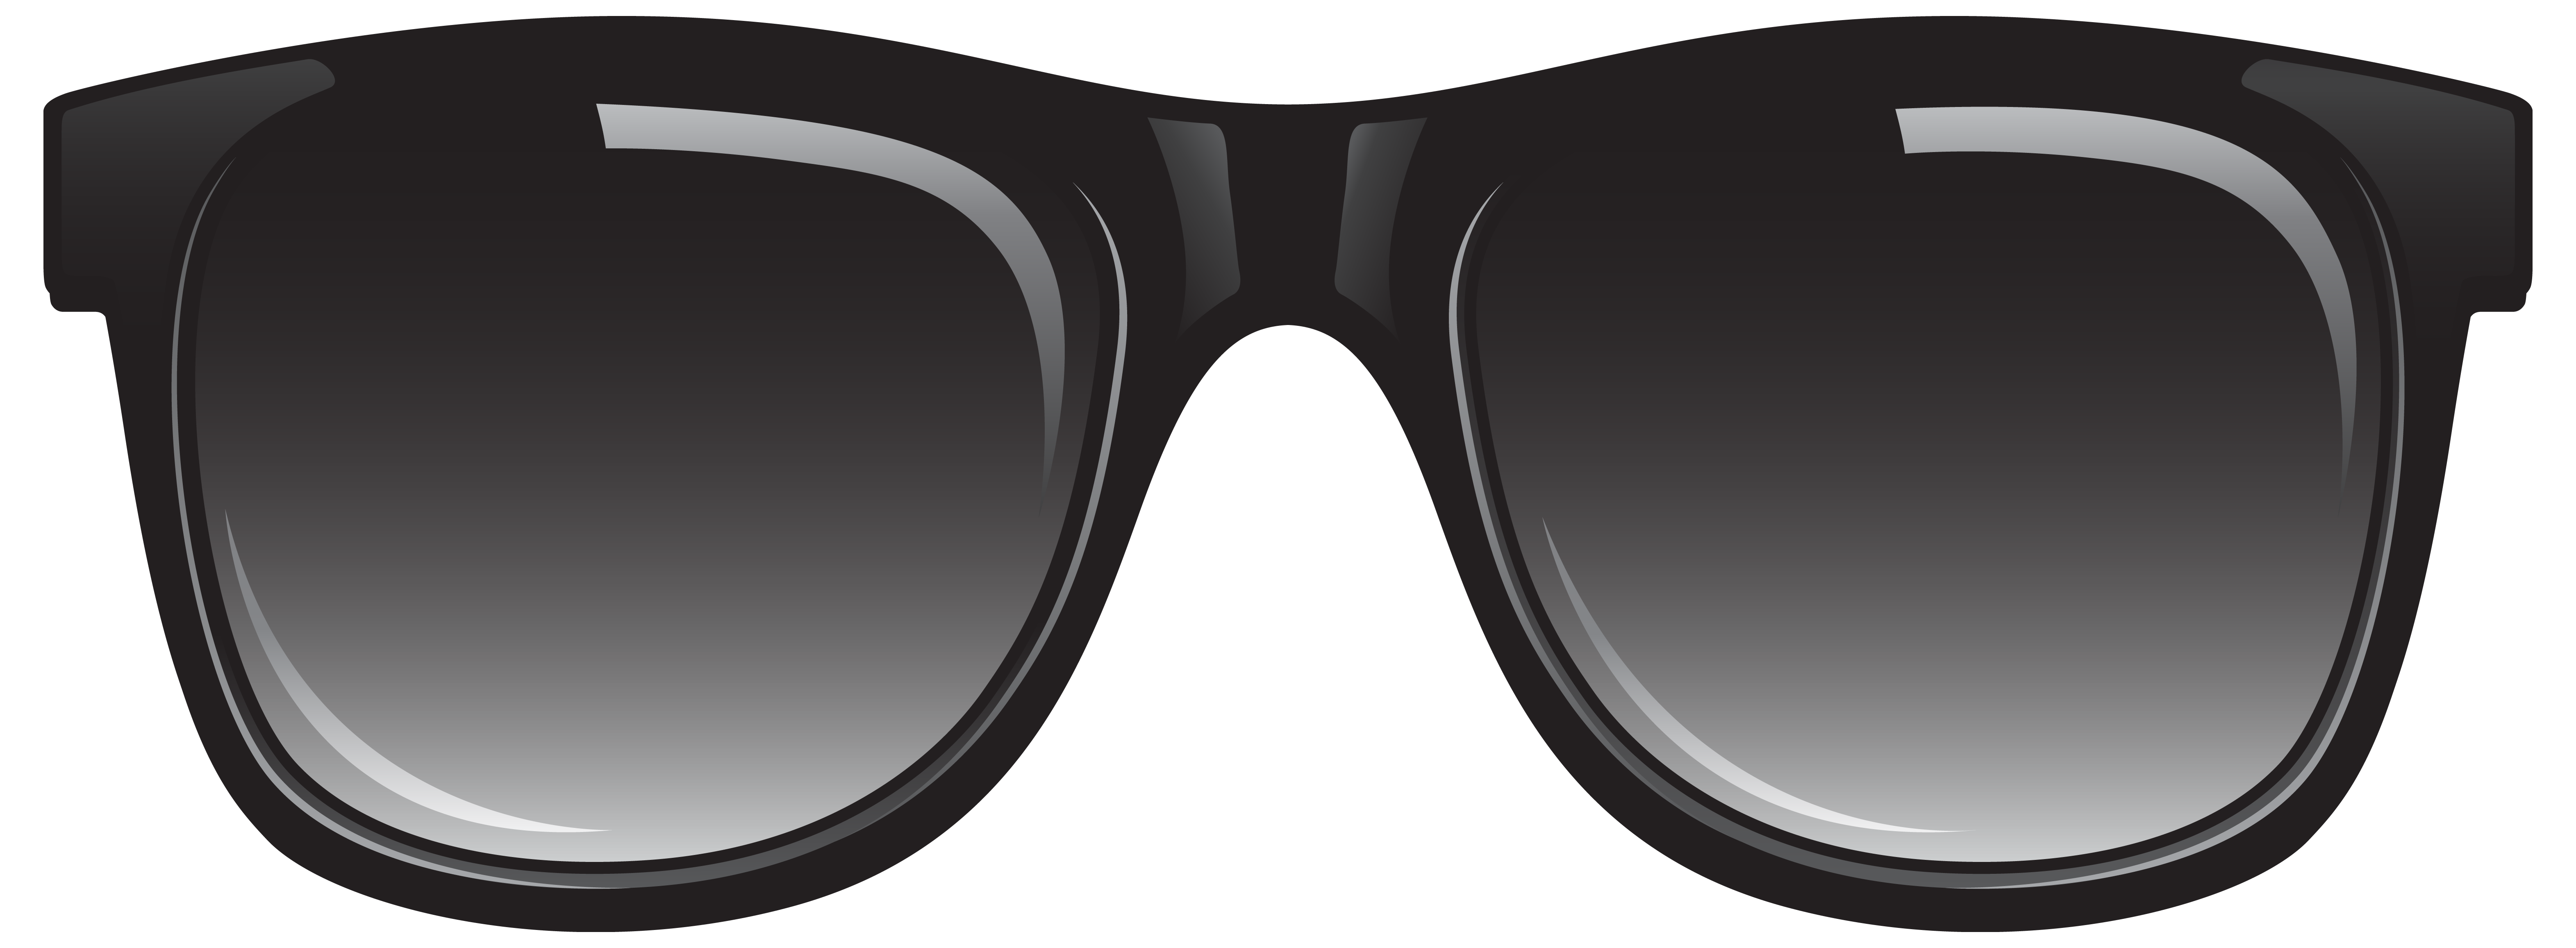 Free Sunglasses Clipart Transparent, Download Free Sunglasses Clipart